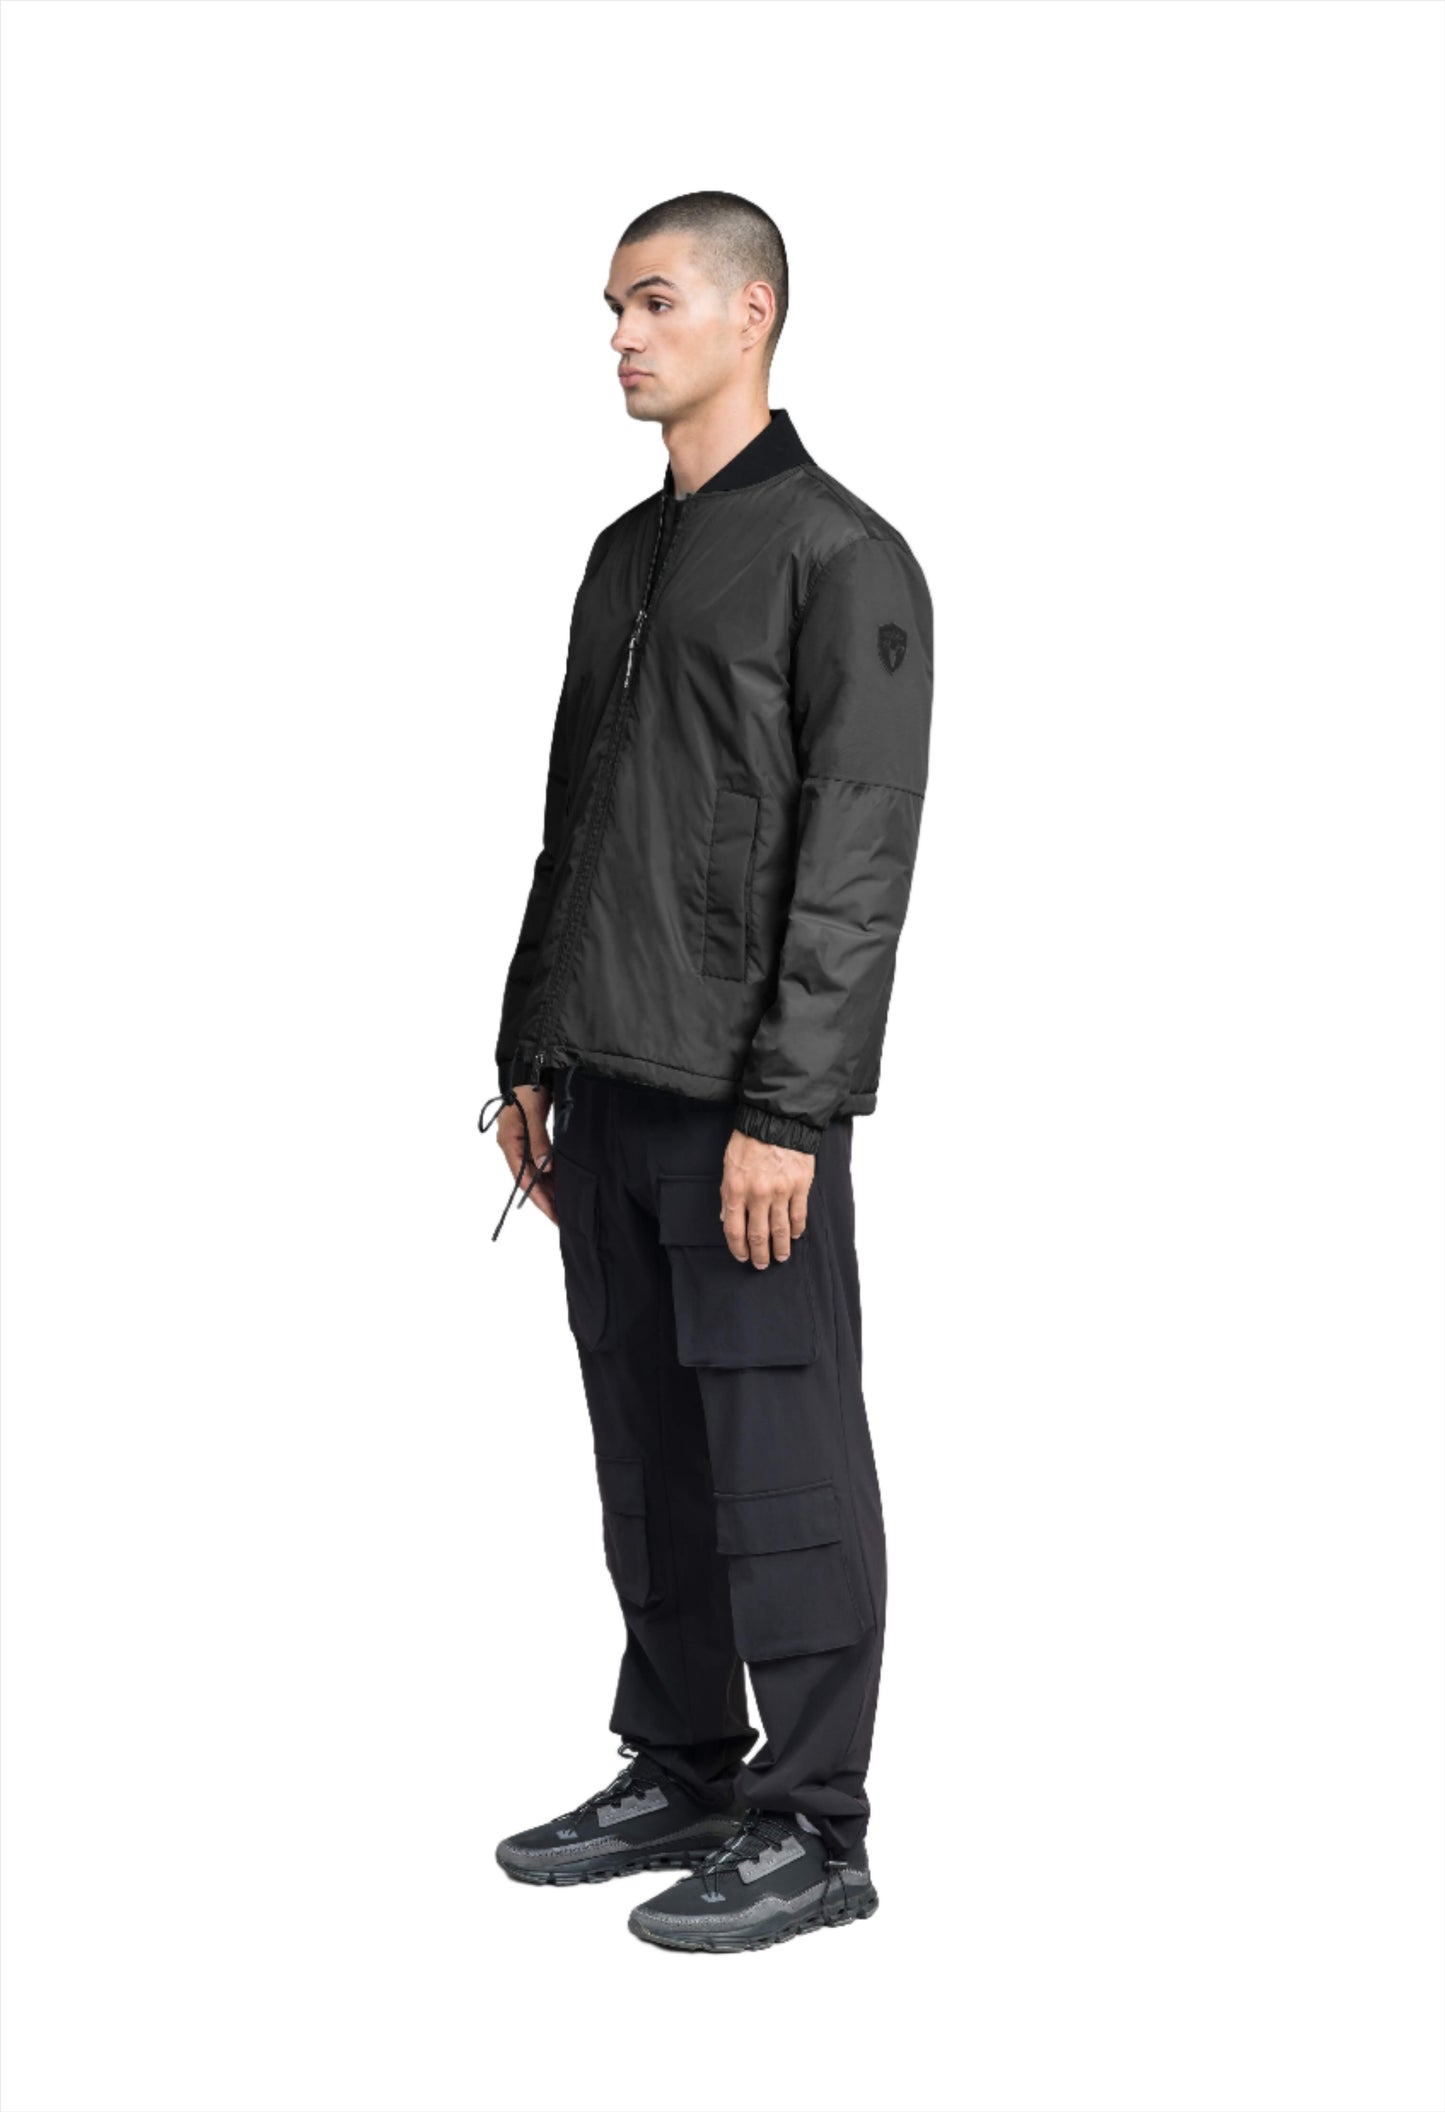 Edgemont Men's Tailored Coach Jacket in hip length, rib knit collar, elastic cuffs, centre front two-wau zipper, single welt waist pockets, adjustable waist drawstring, in Black